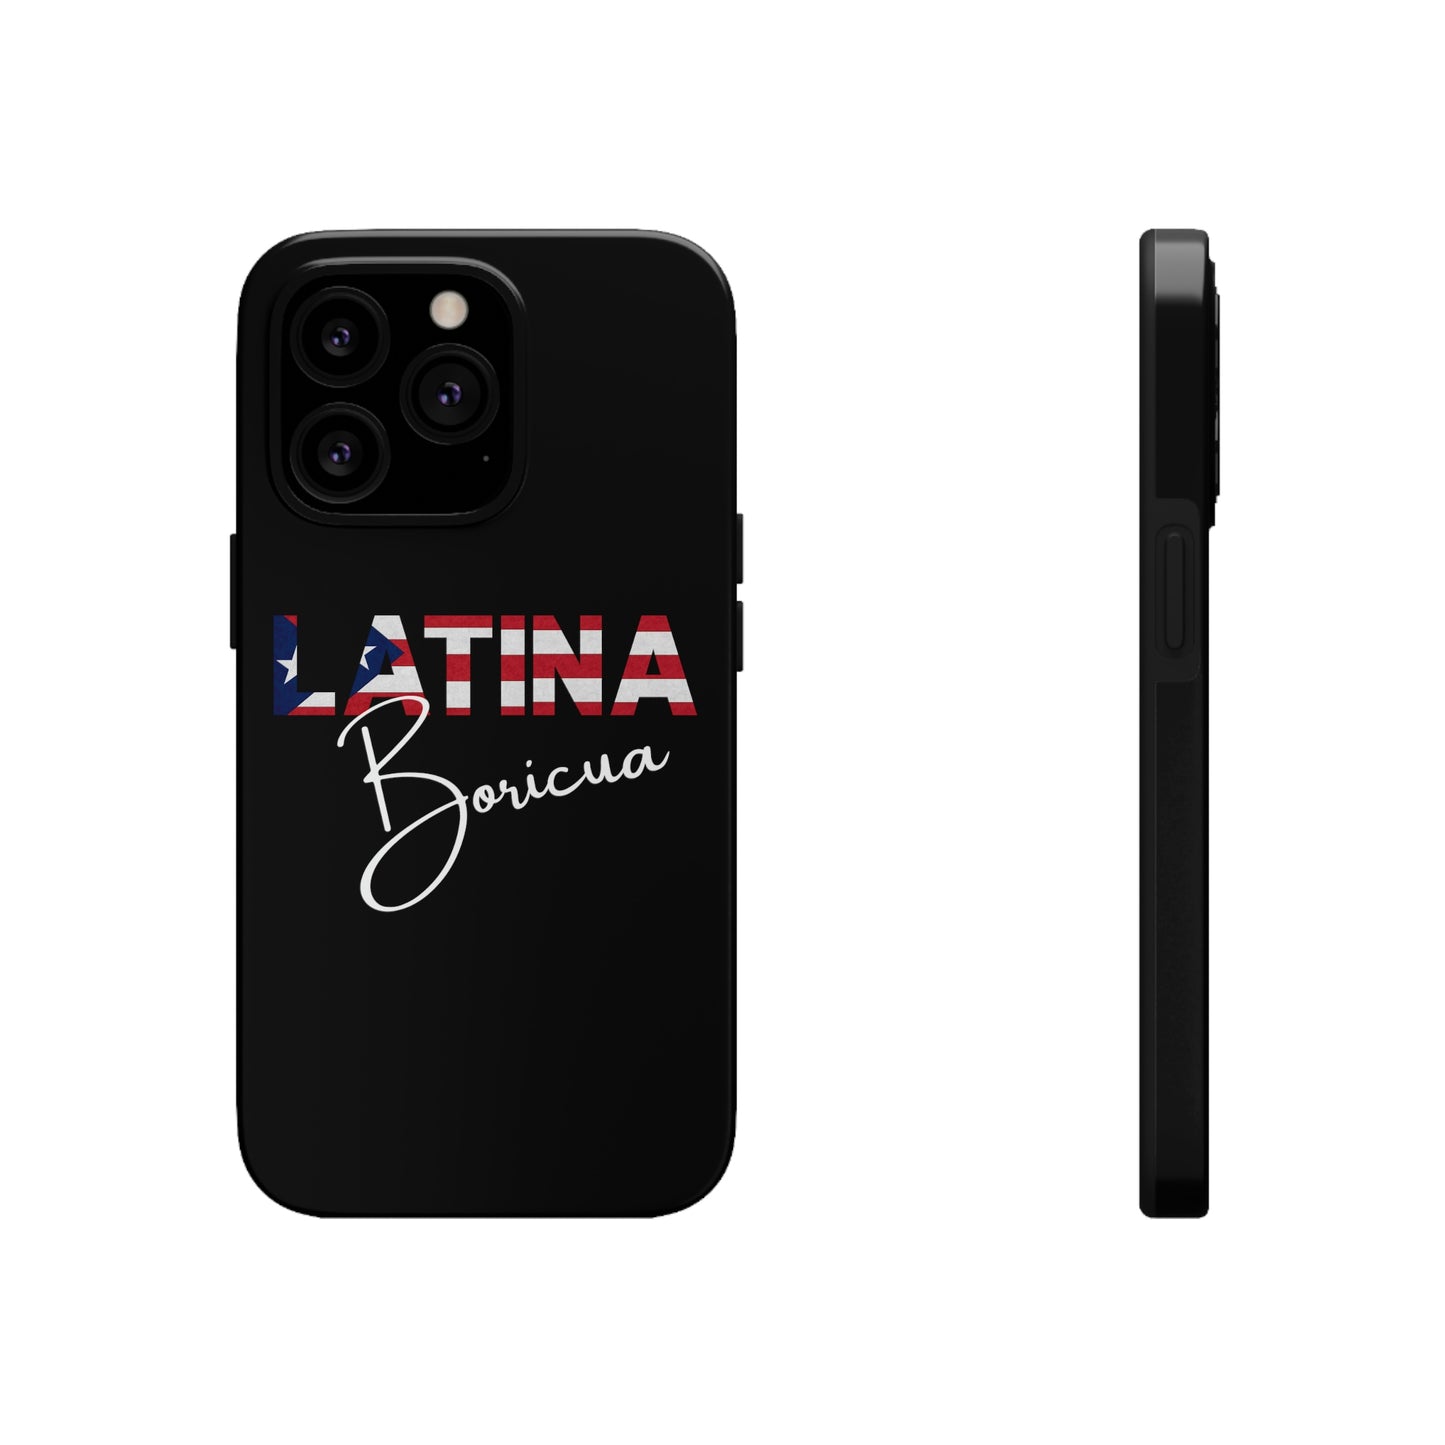 Latina Boricua, iPhone Hard Case